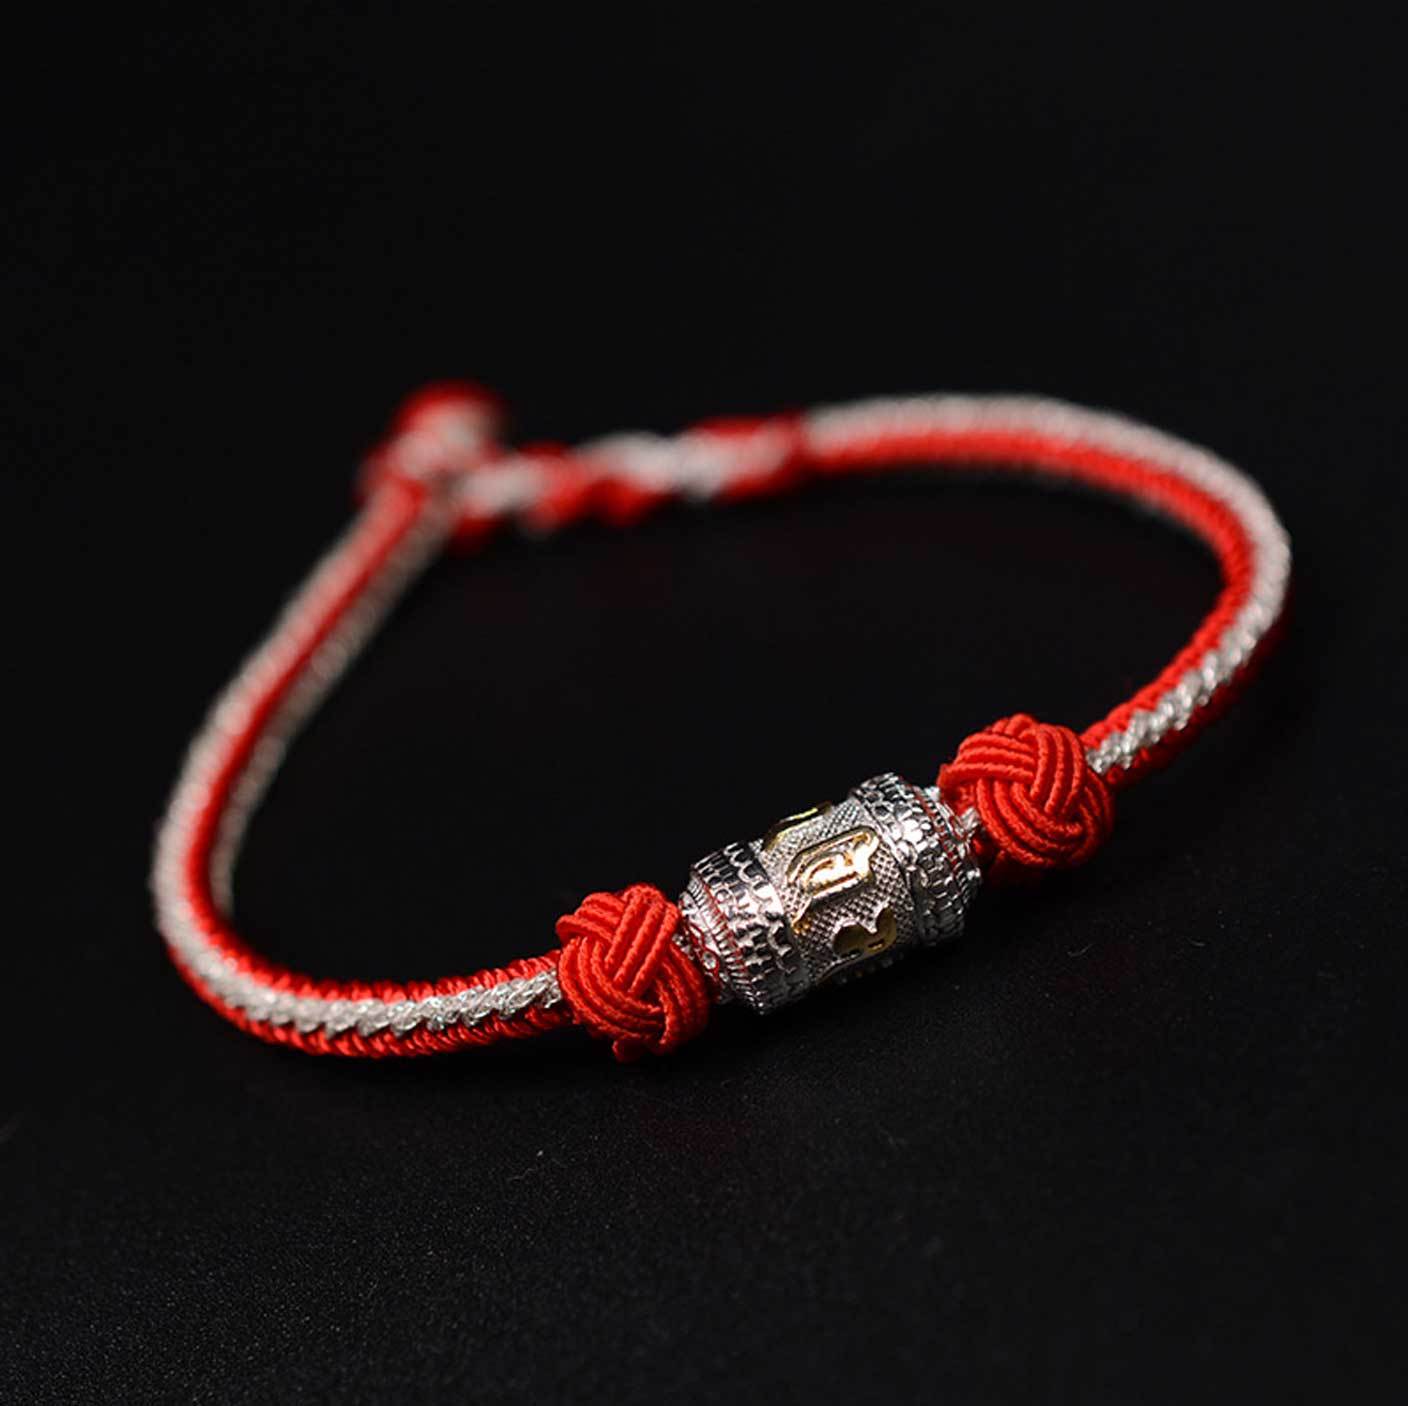 IndianStore4All Red String Bracelet Red String India